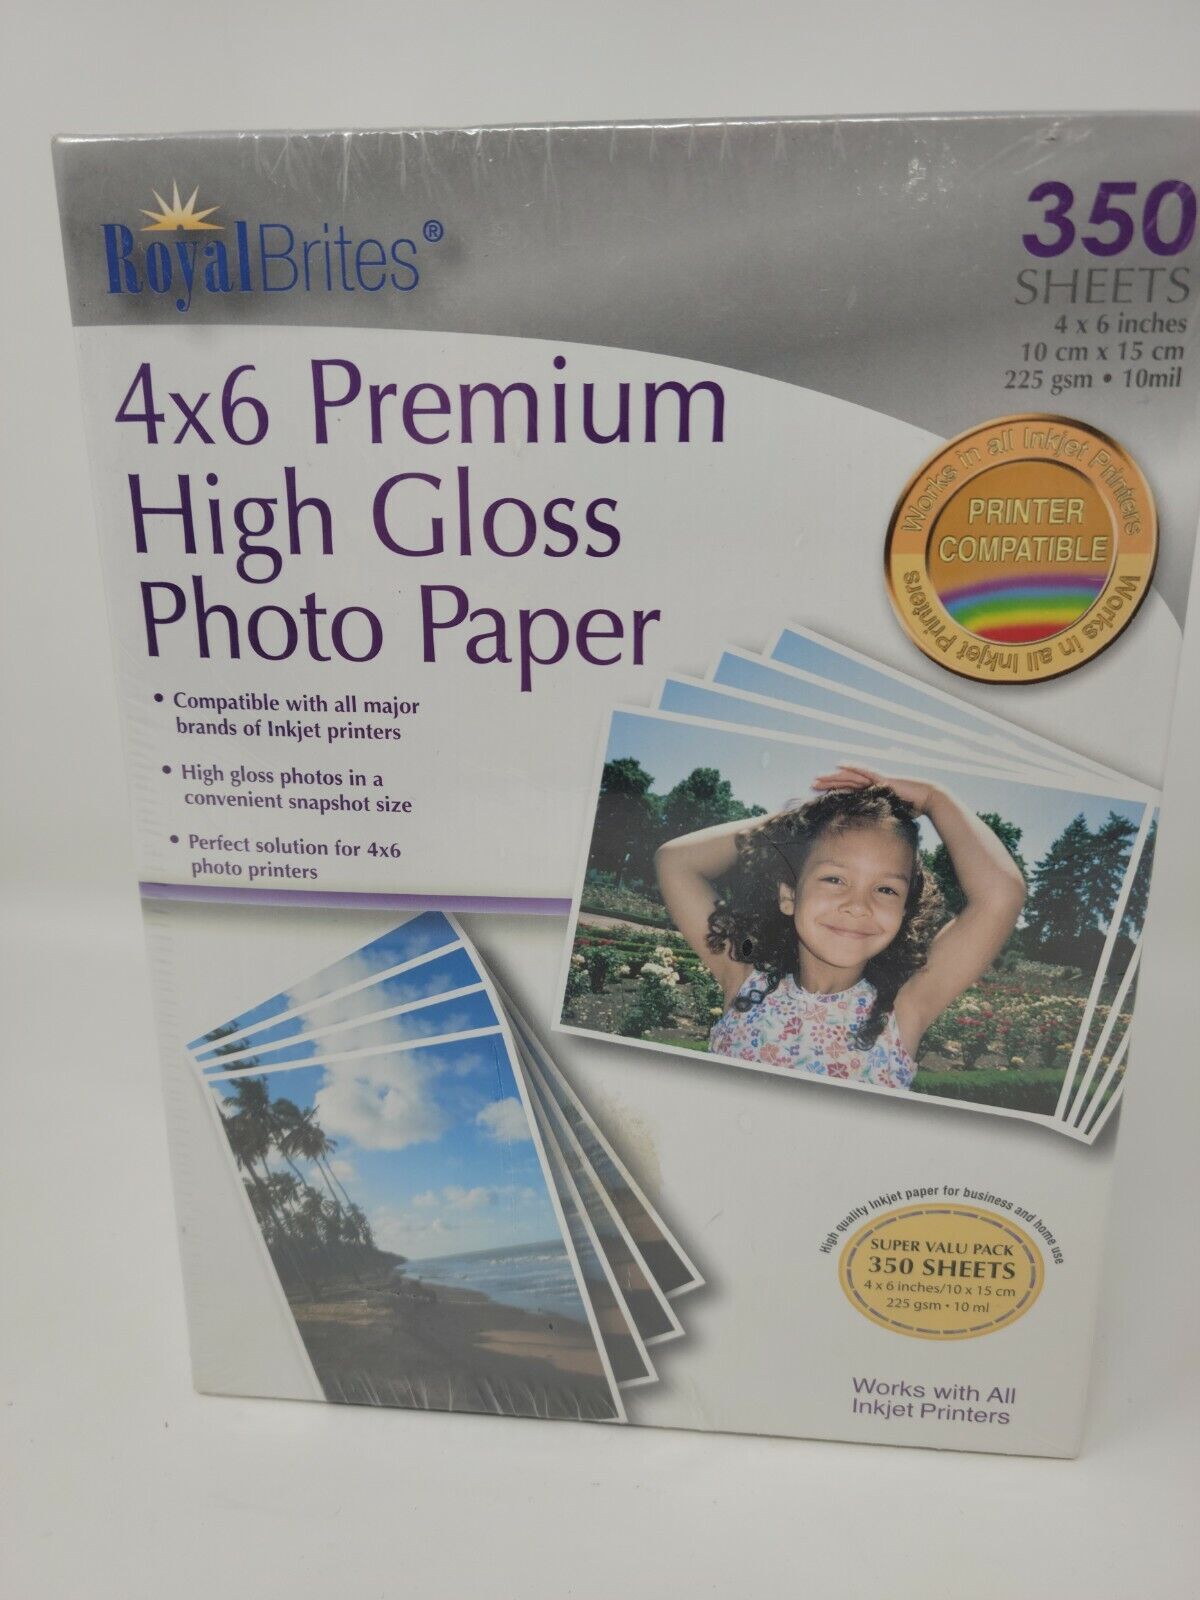 Royal Brites 4" x 6" Premium High Gloss Photo Paper 350 Sheets Sealed 